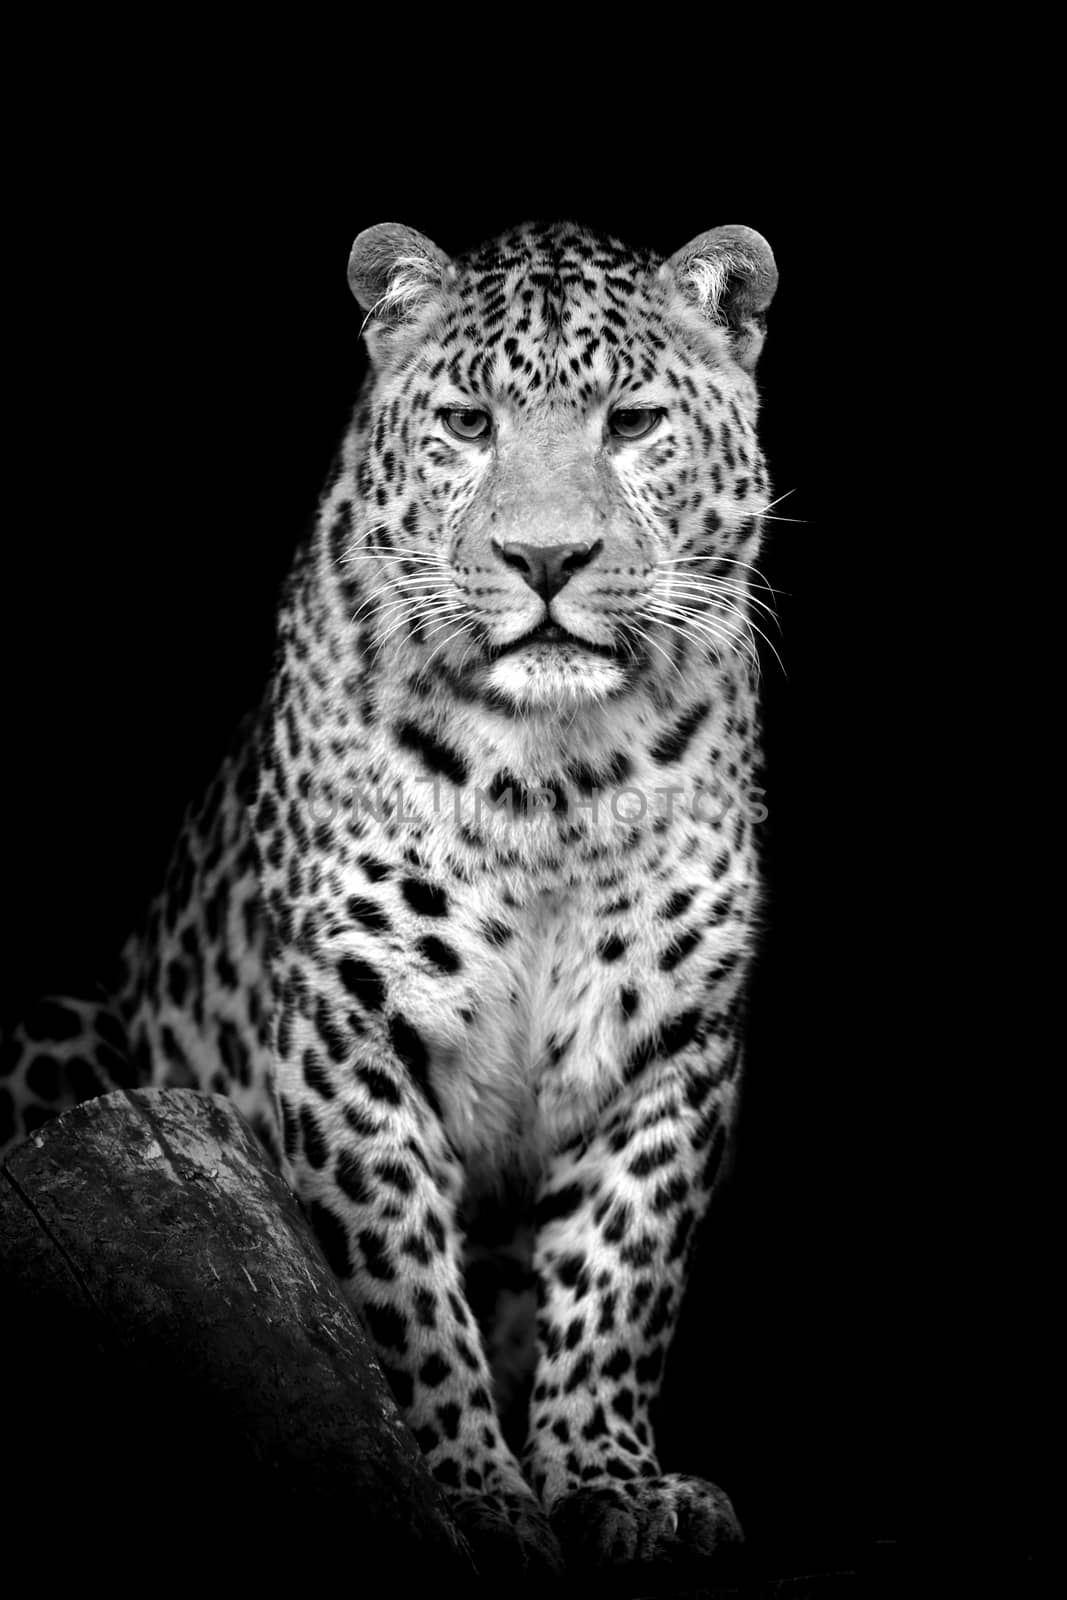 Leopard on dark background. Black and white image